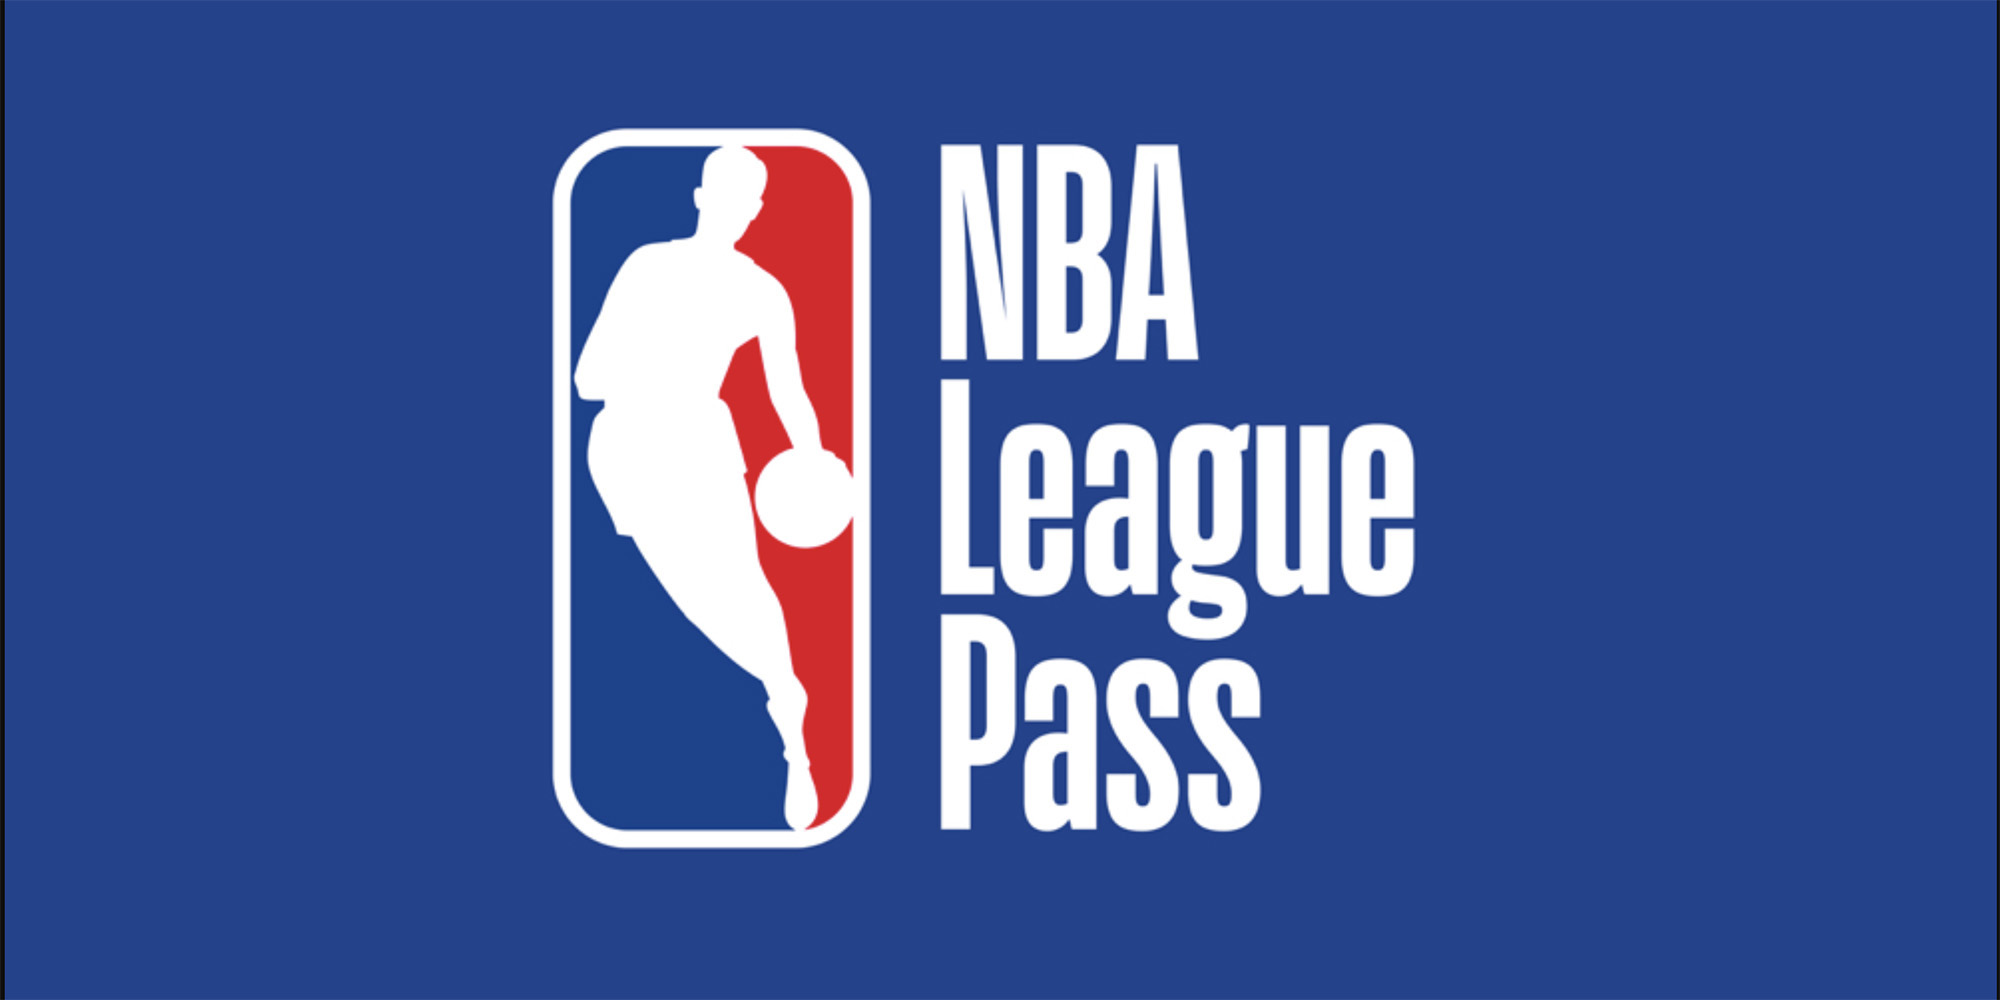 nba league pass premium youtube tv